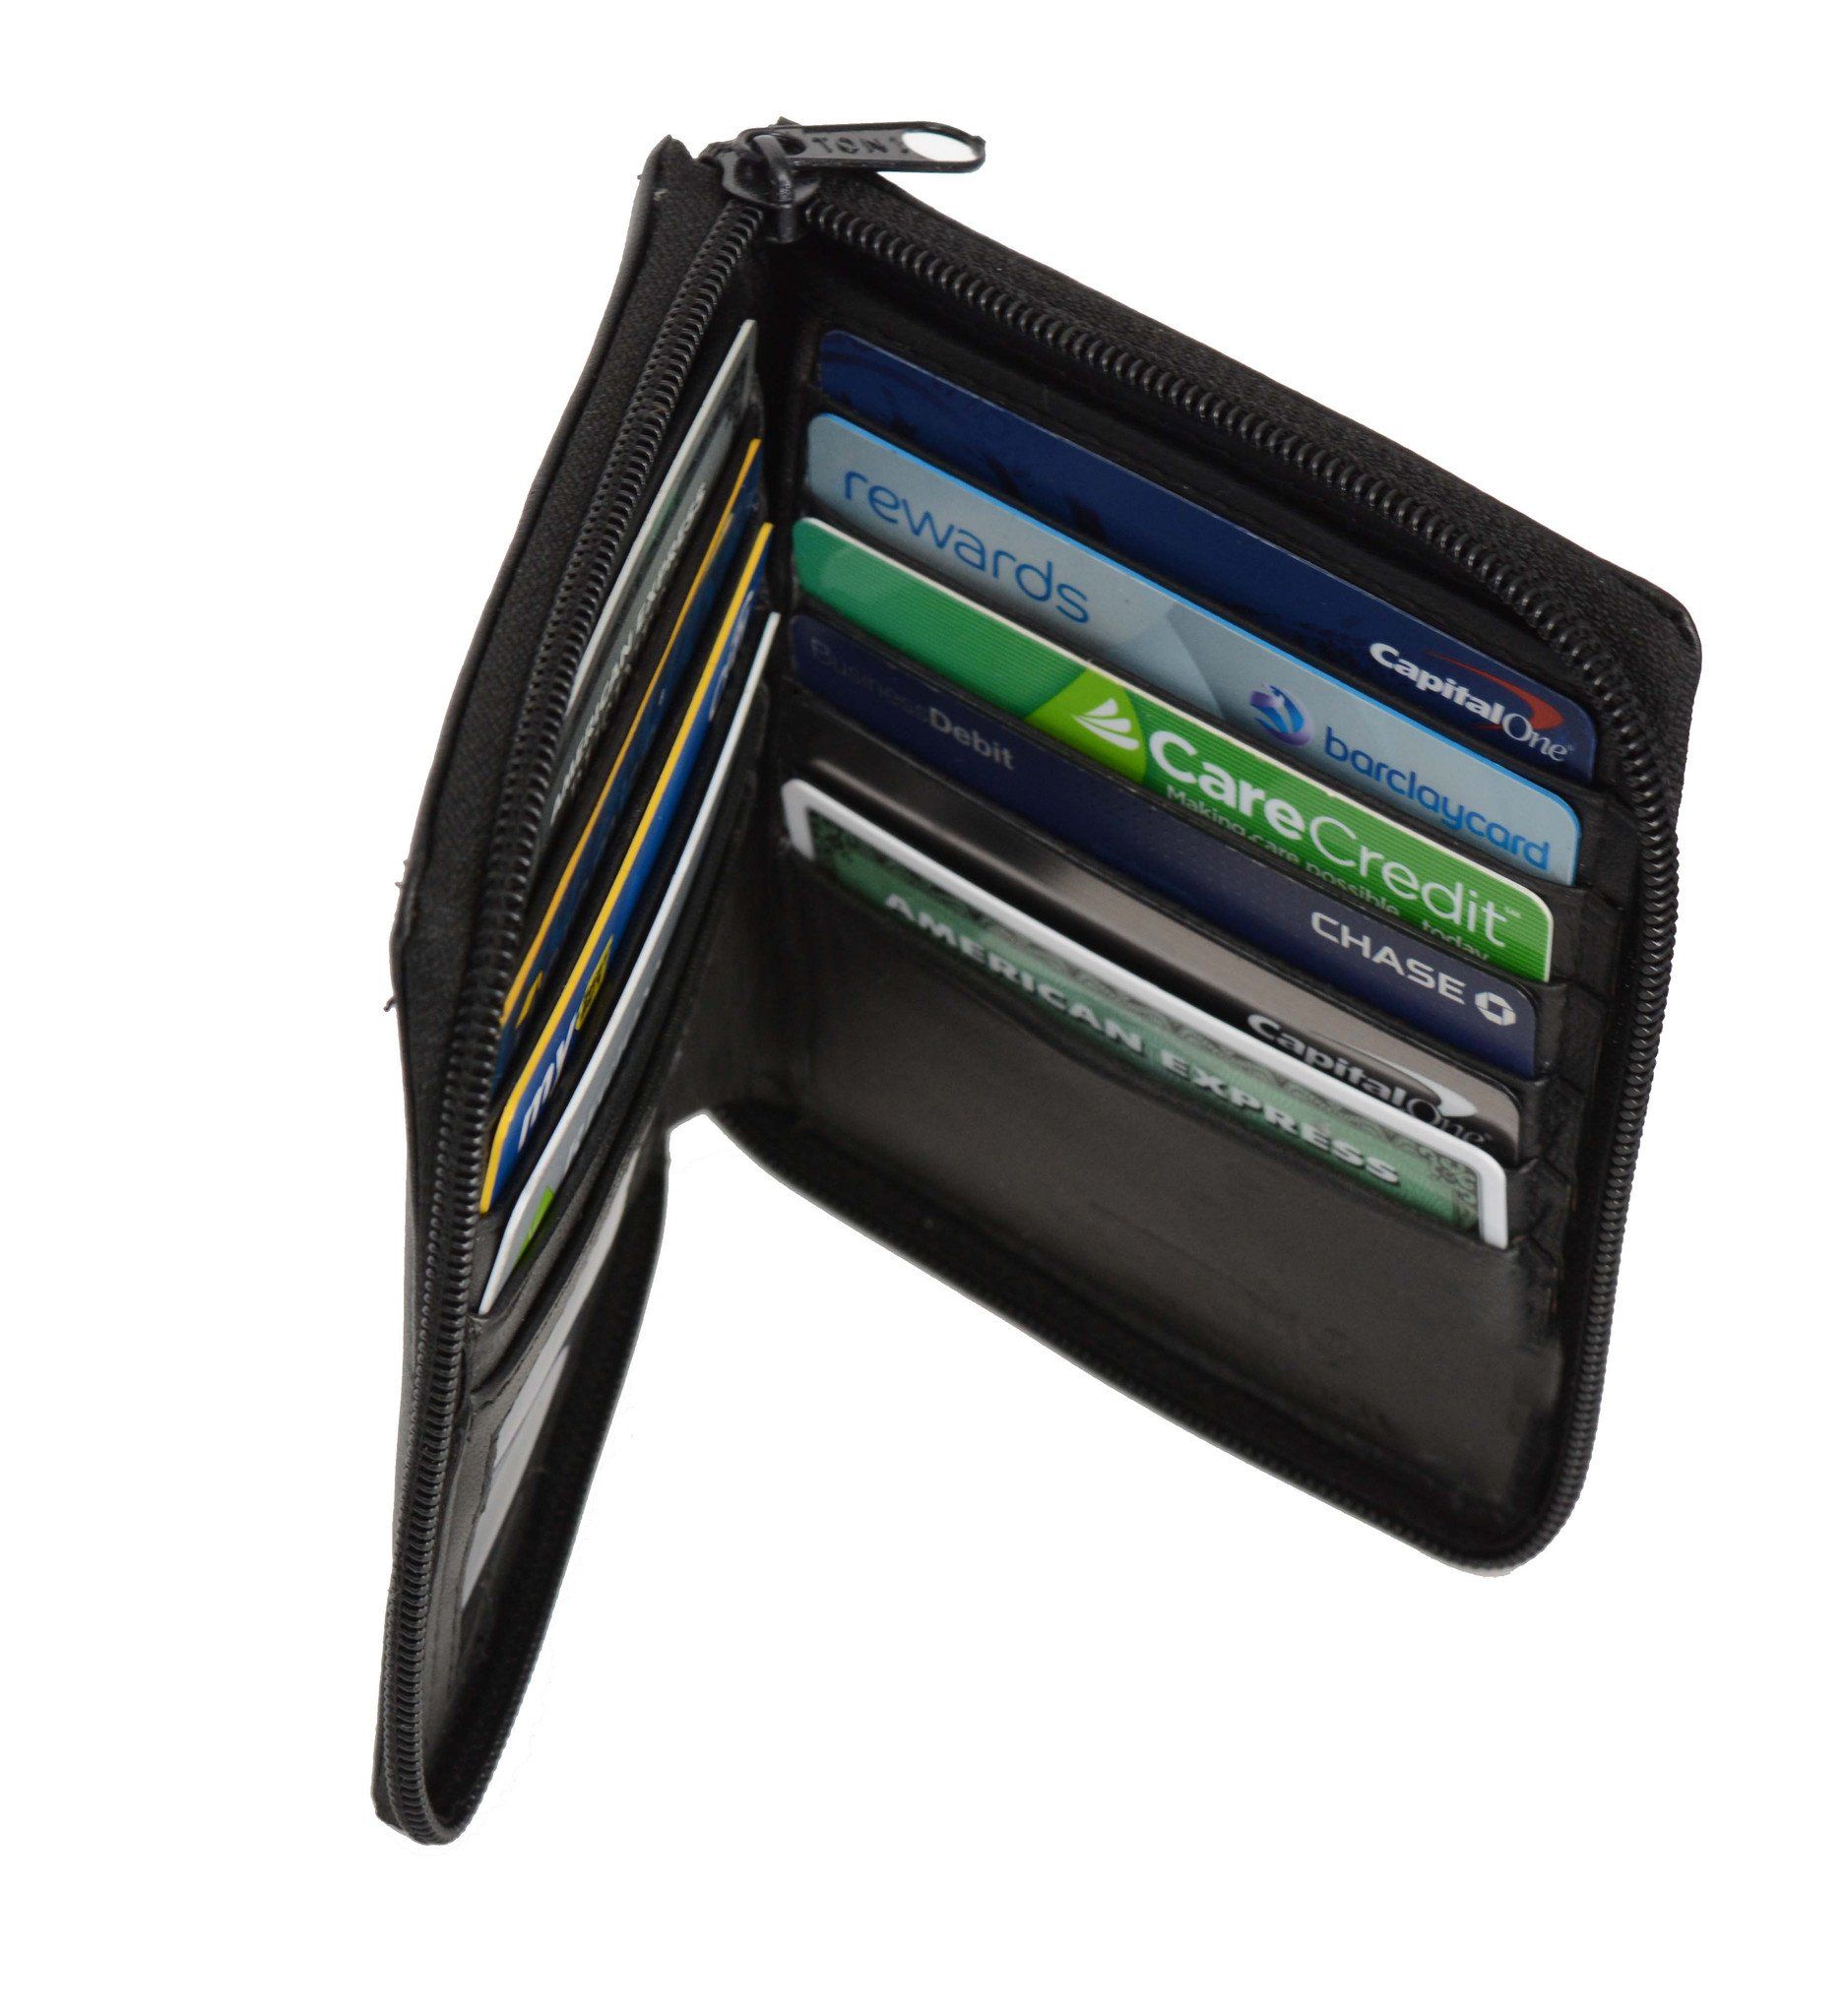 Adorable Deluxe RFID-Blocking Genuine Leather European Style Wallet - Black